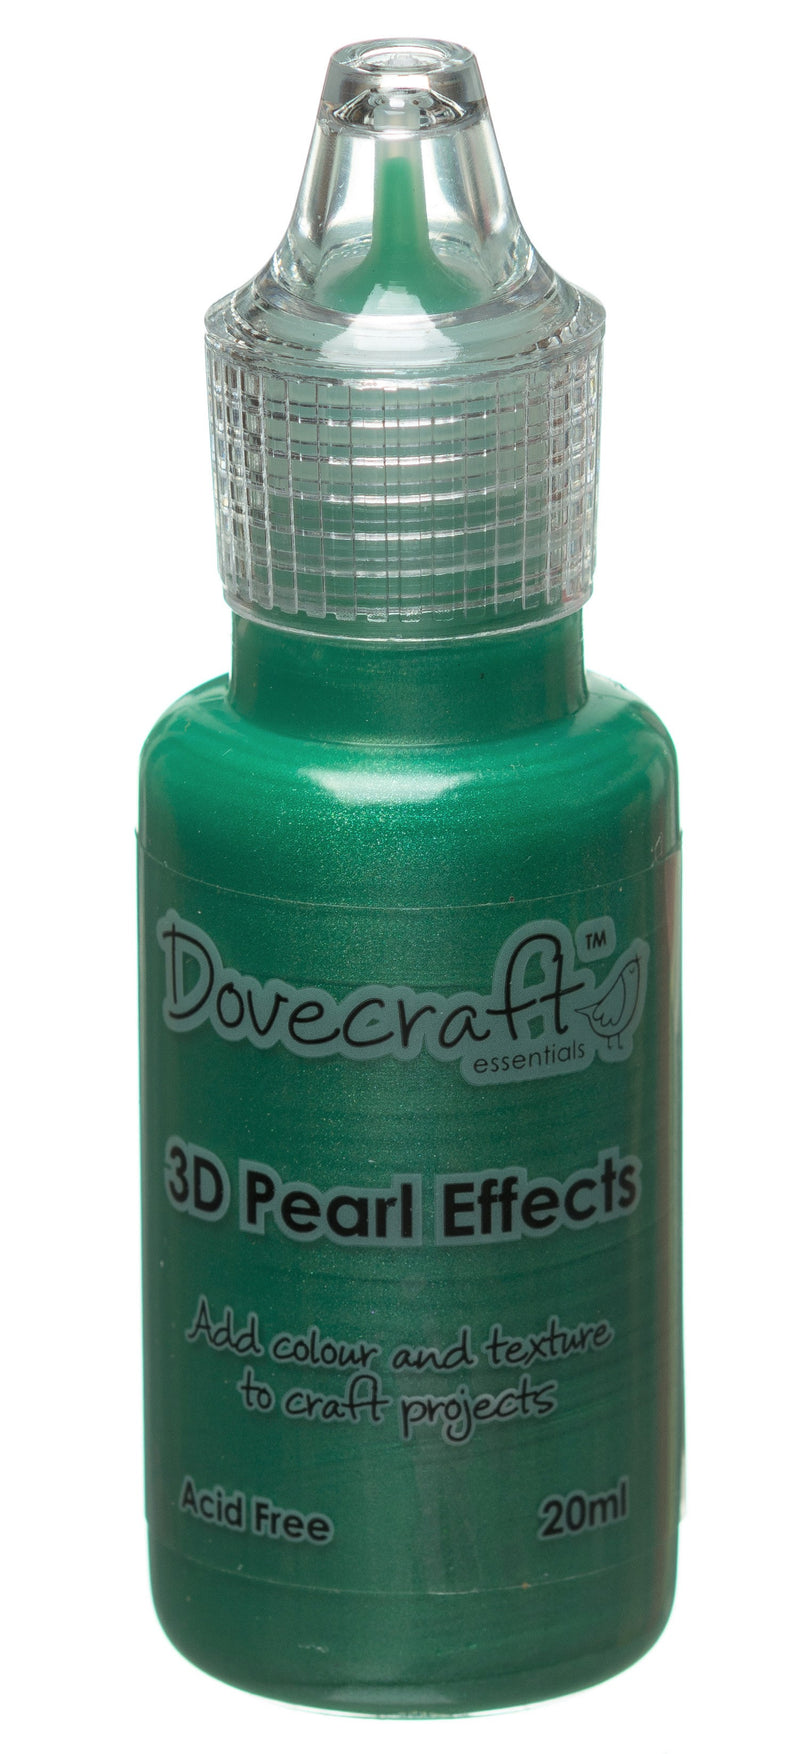 Green Dovecraft Liquid Pearl Paint